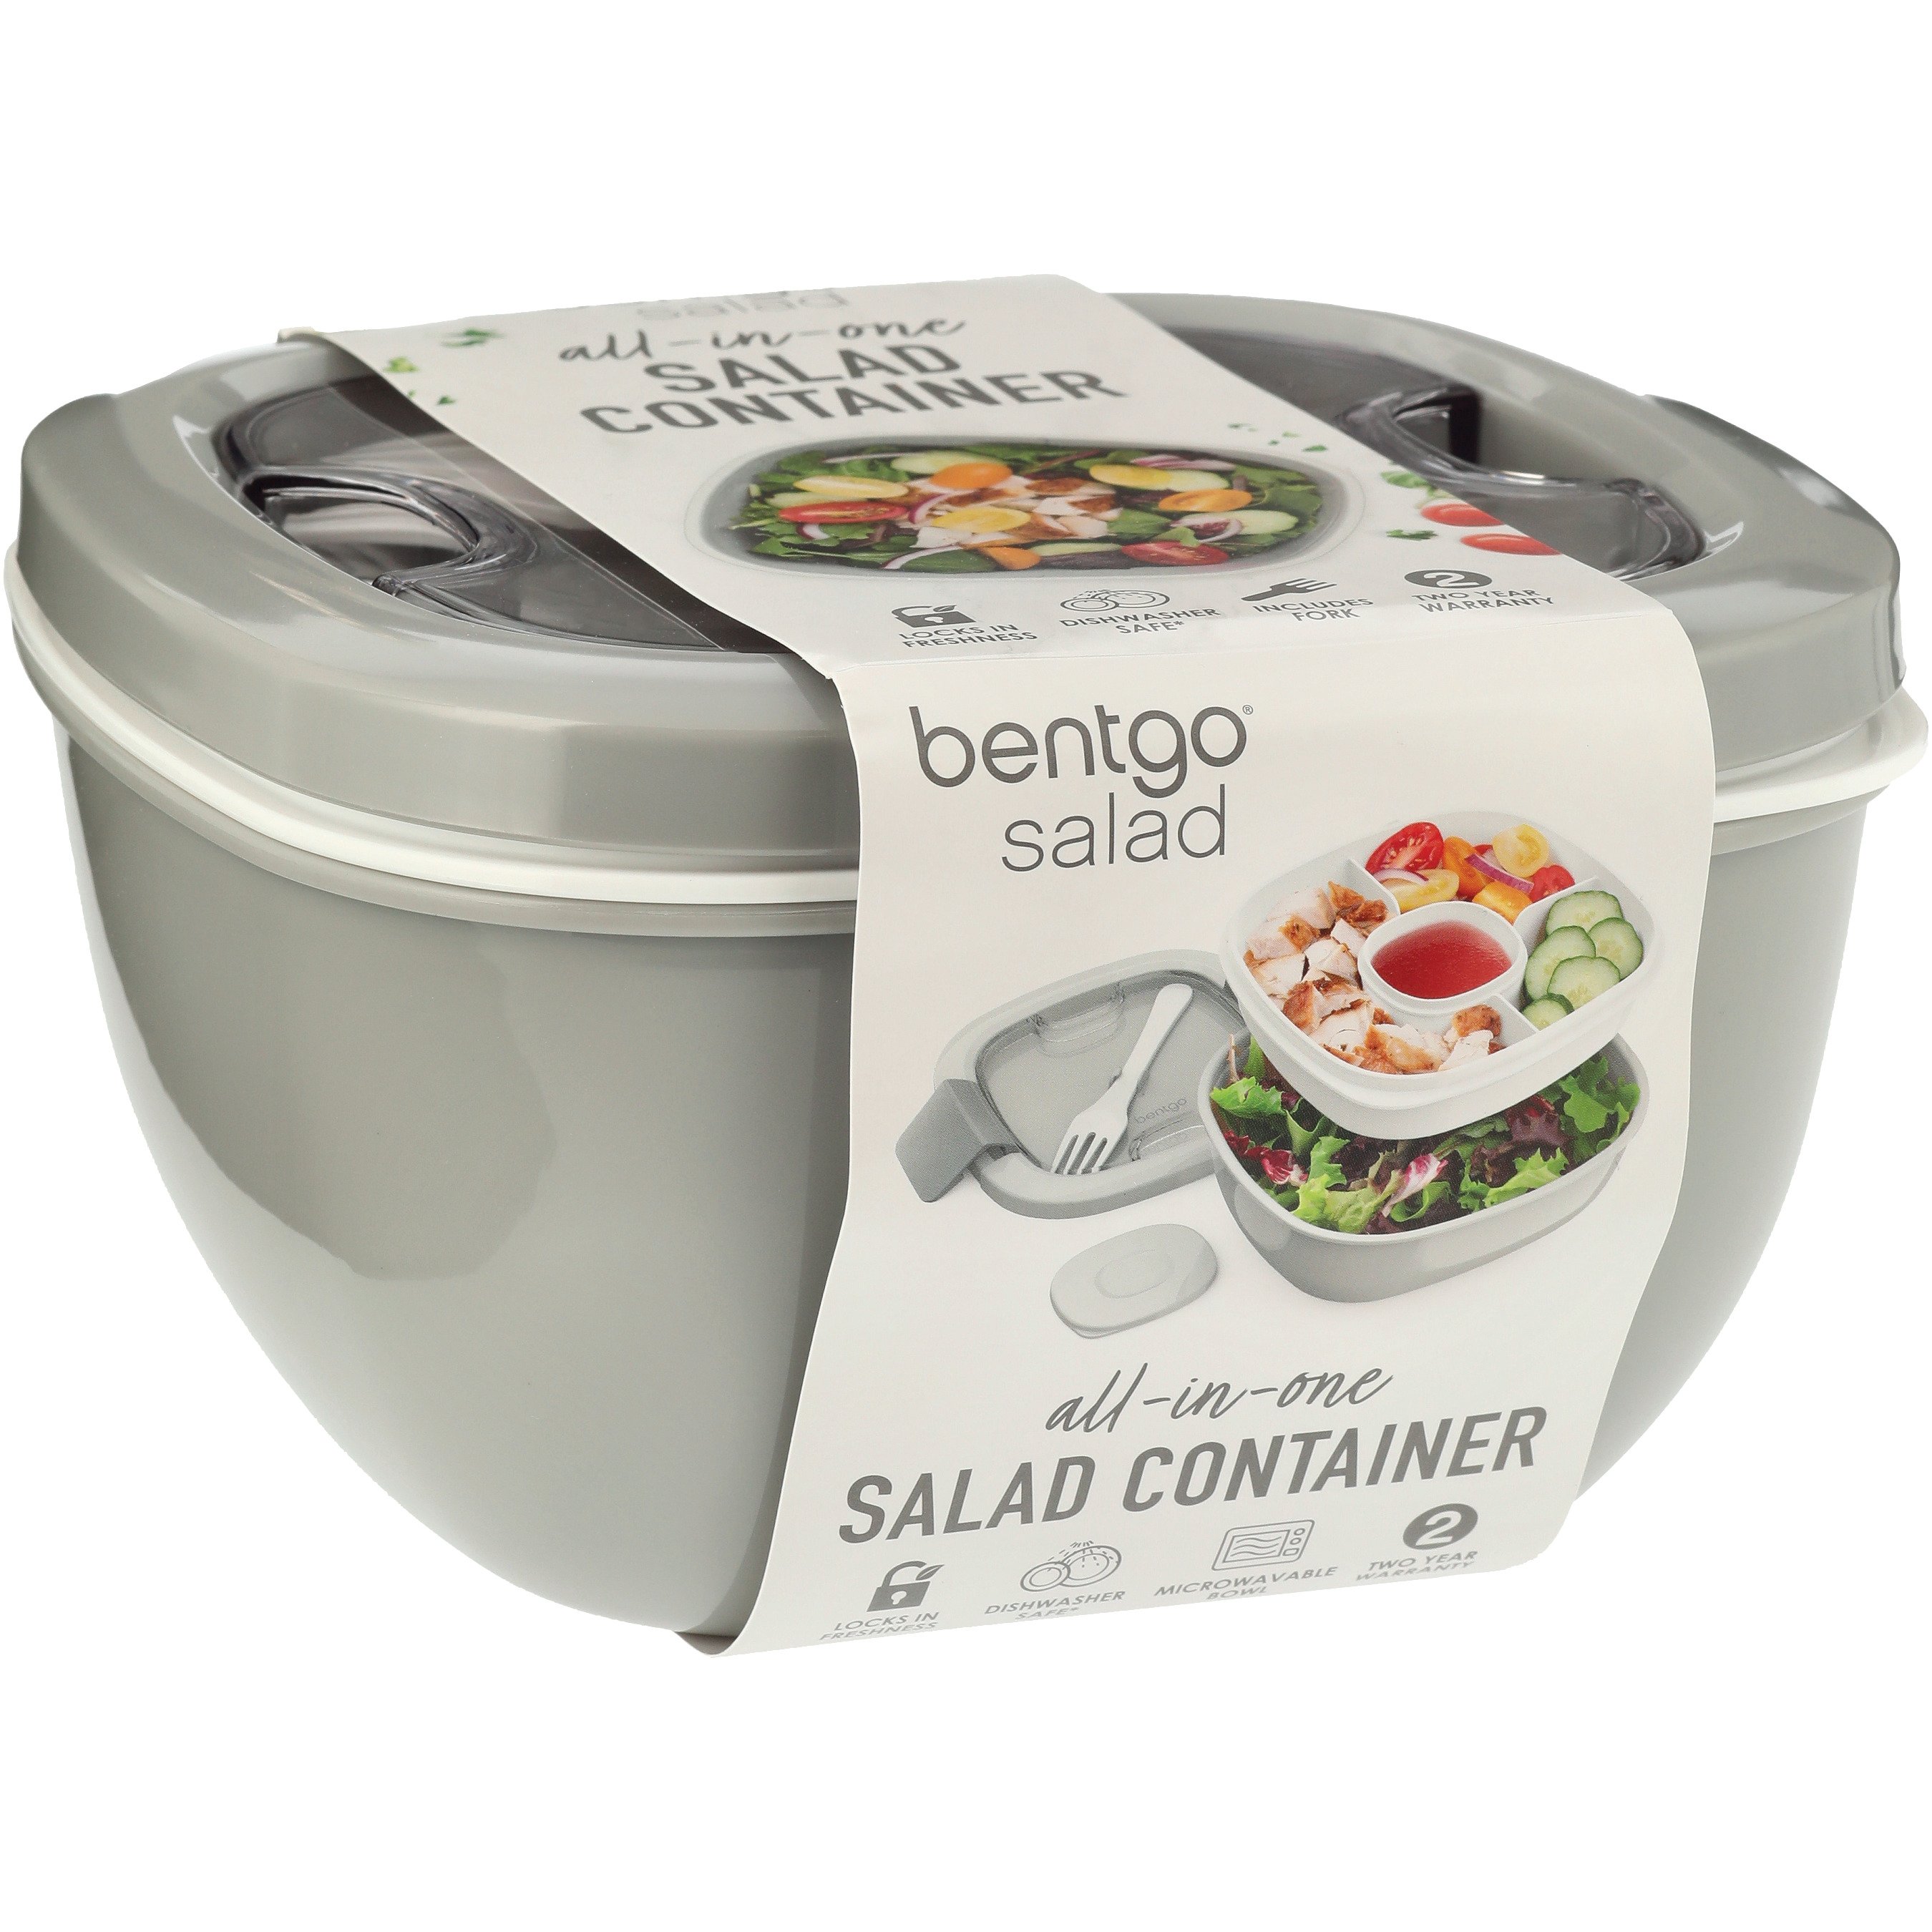 Bentgo Salad Container Review 